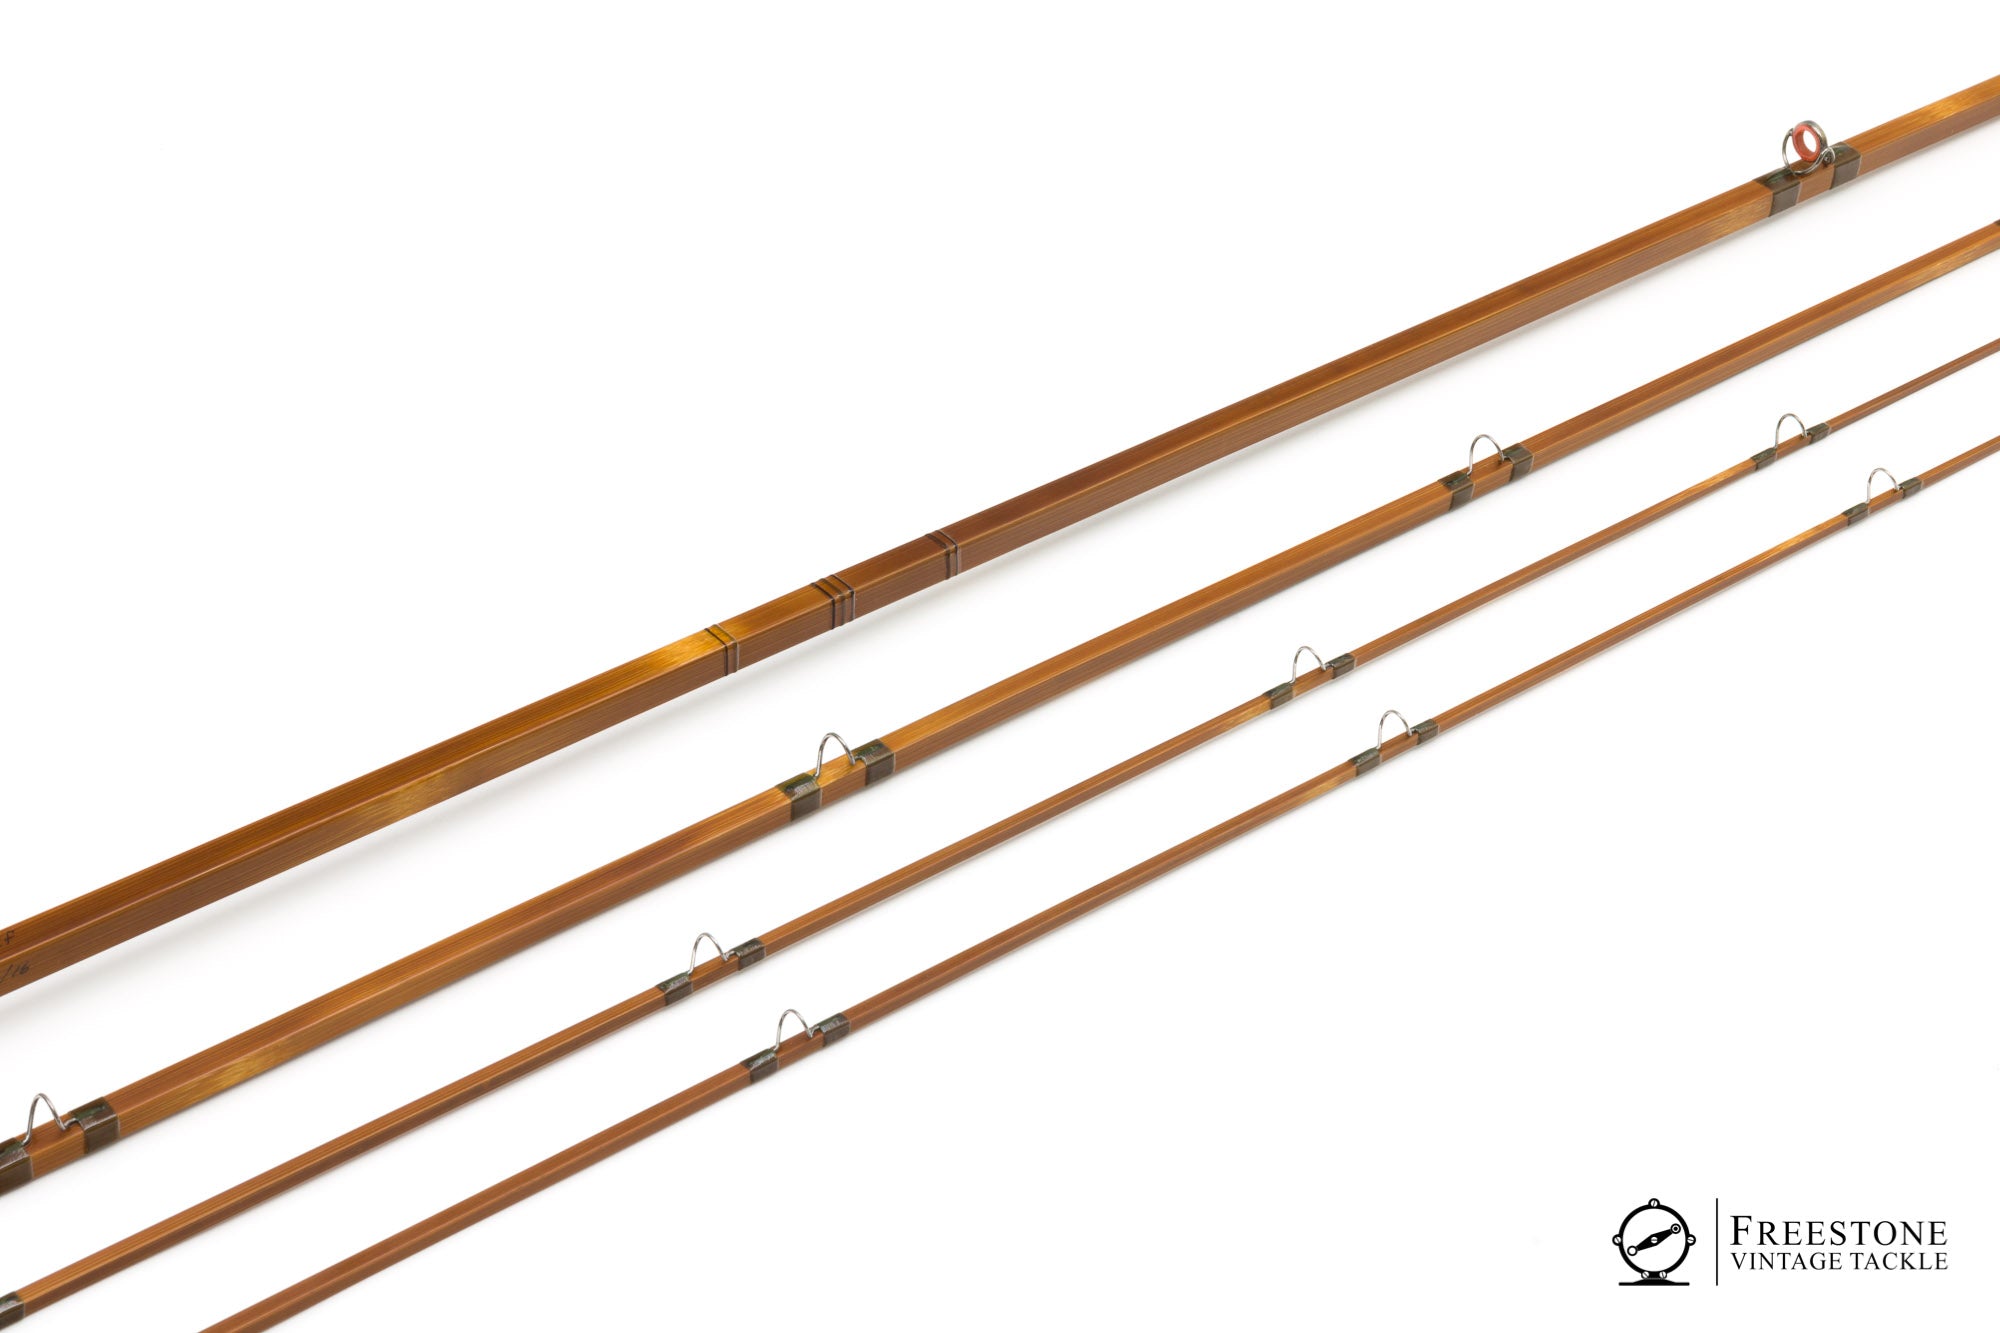 VTG 12' Three Piece Bamboo Wood Fishing Rod - Rustic, Primitive